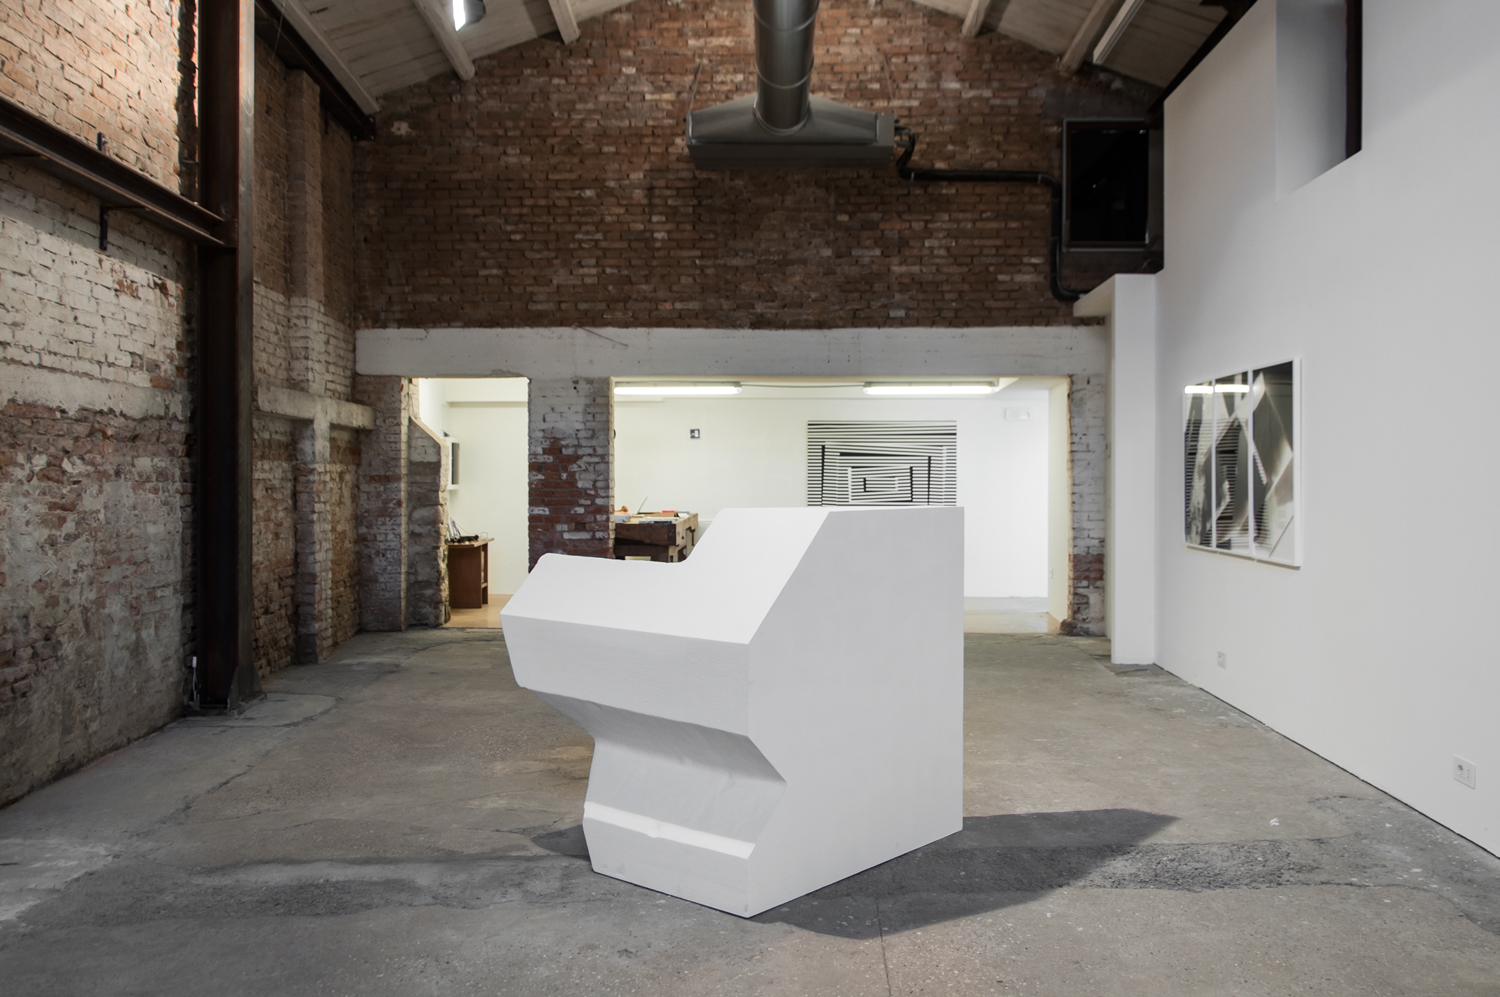 Extedend architectures, exhibition view at Galleria Alberta Pane, Venezia 2018, photo Irene Fanizza